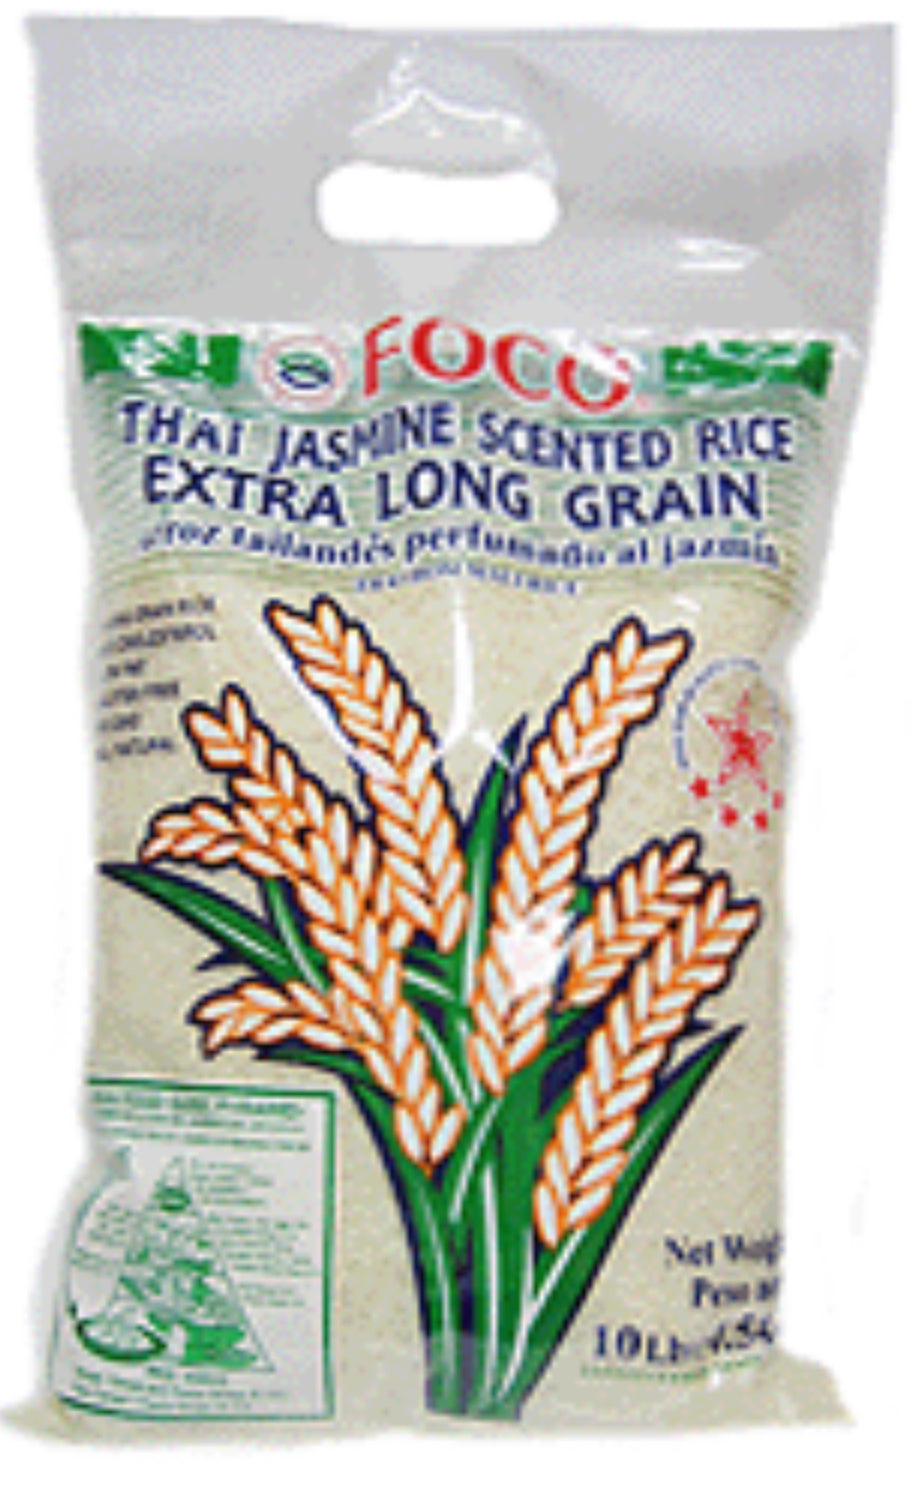 Foco Thai Jasmine Scented Rice 10LBS